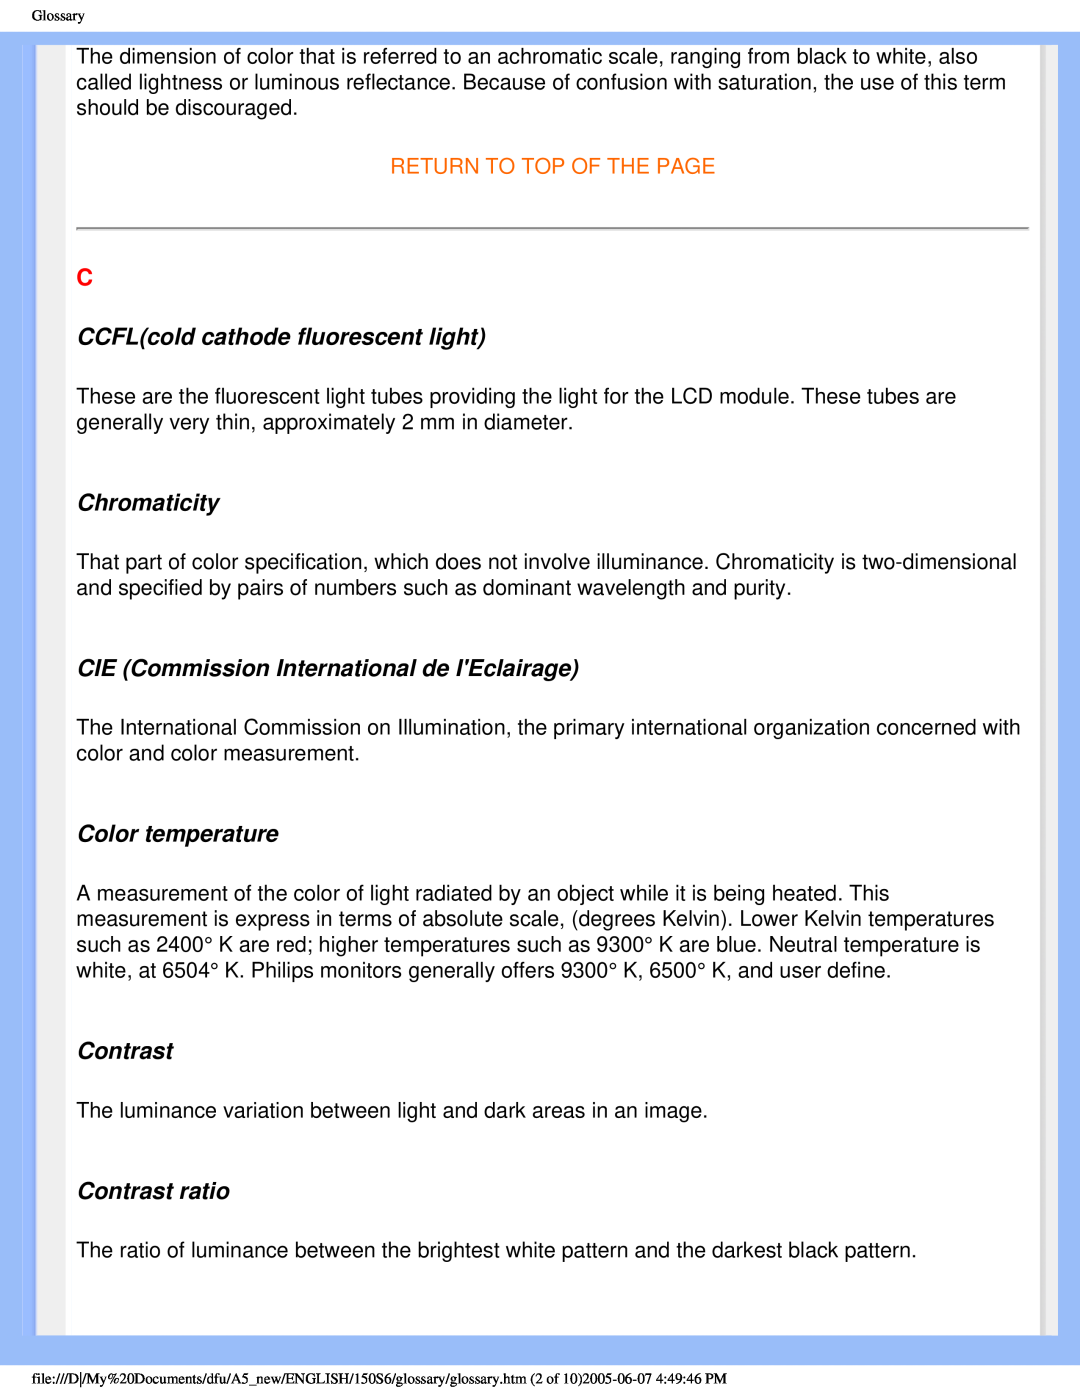 Philips 15056 CCFLcold cathode fluorescent light, Chromaticity, CIE Commission International de IEclairage, Contrast 